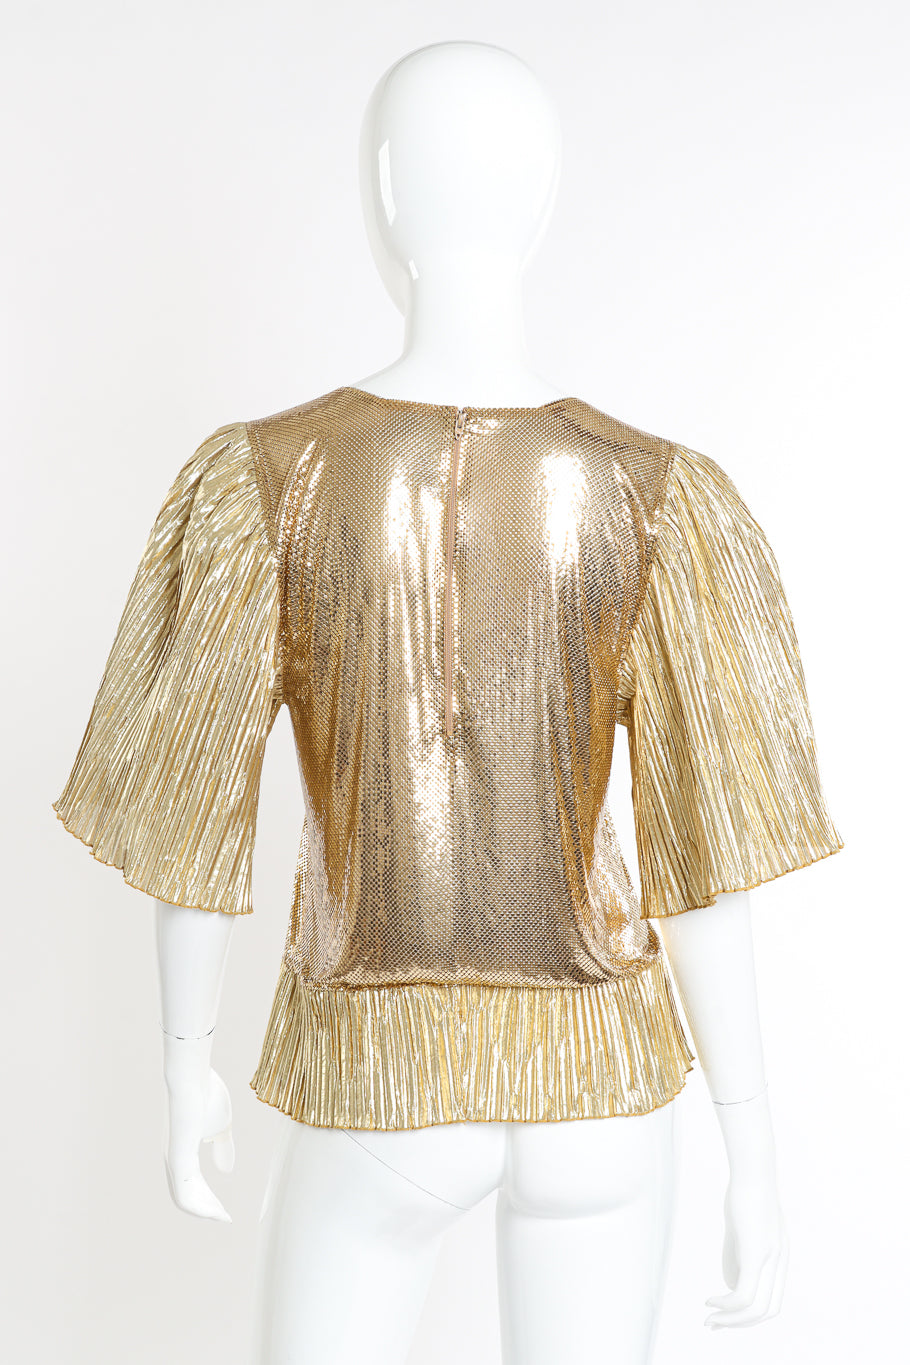 Vintage Whiting & Davis Gold Mesh Box Top II back on mannequin @recessla